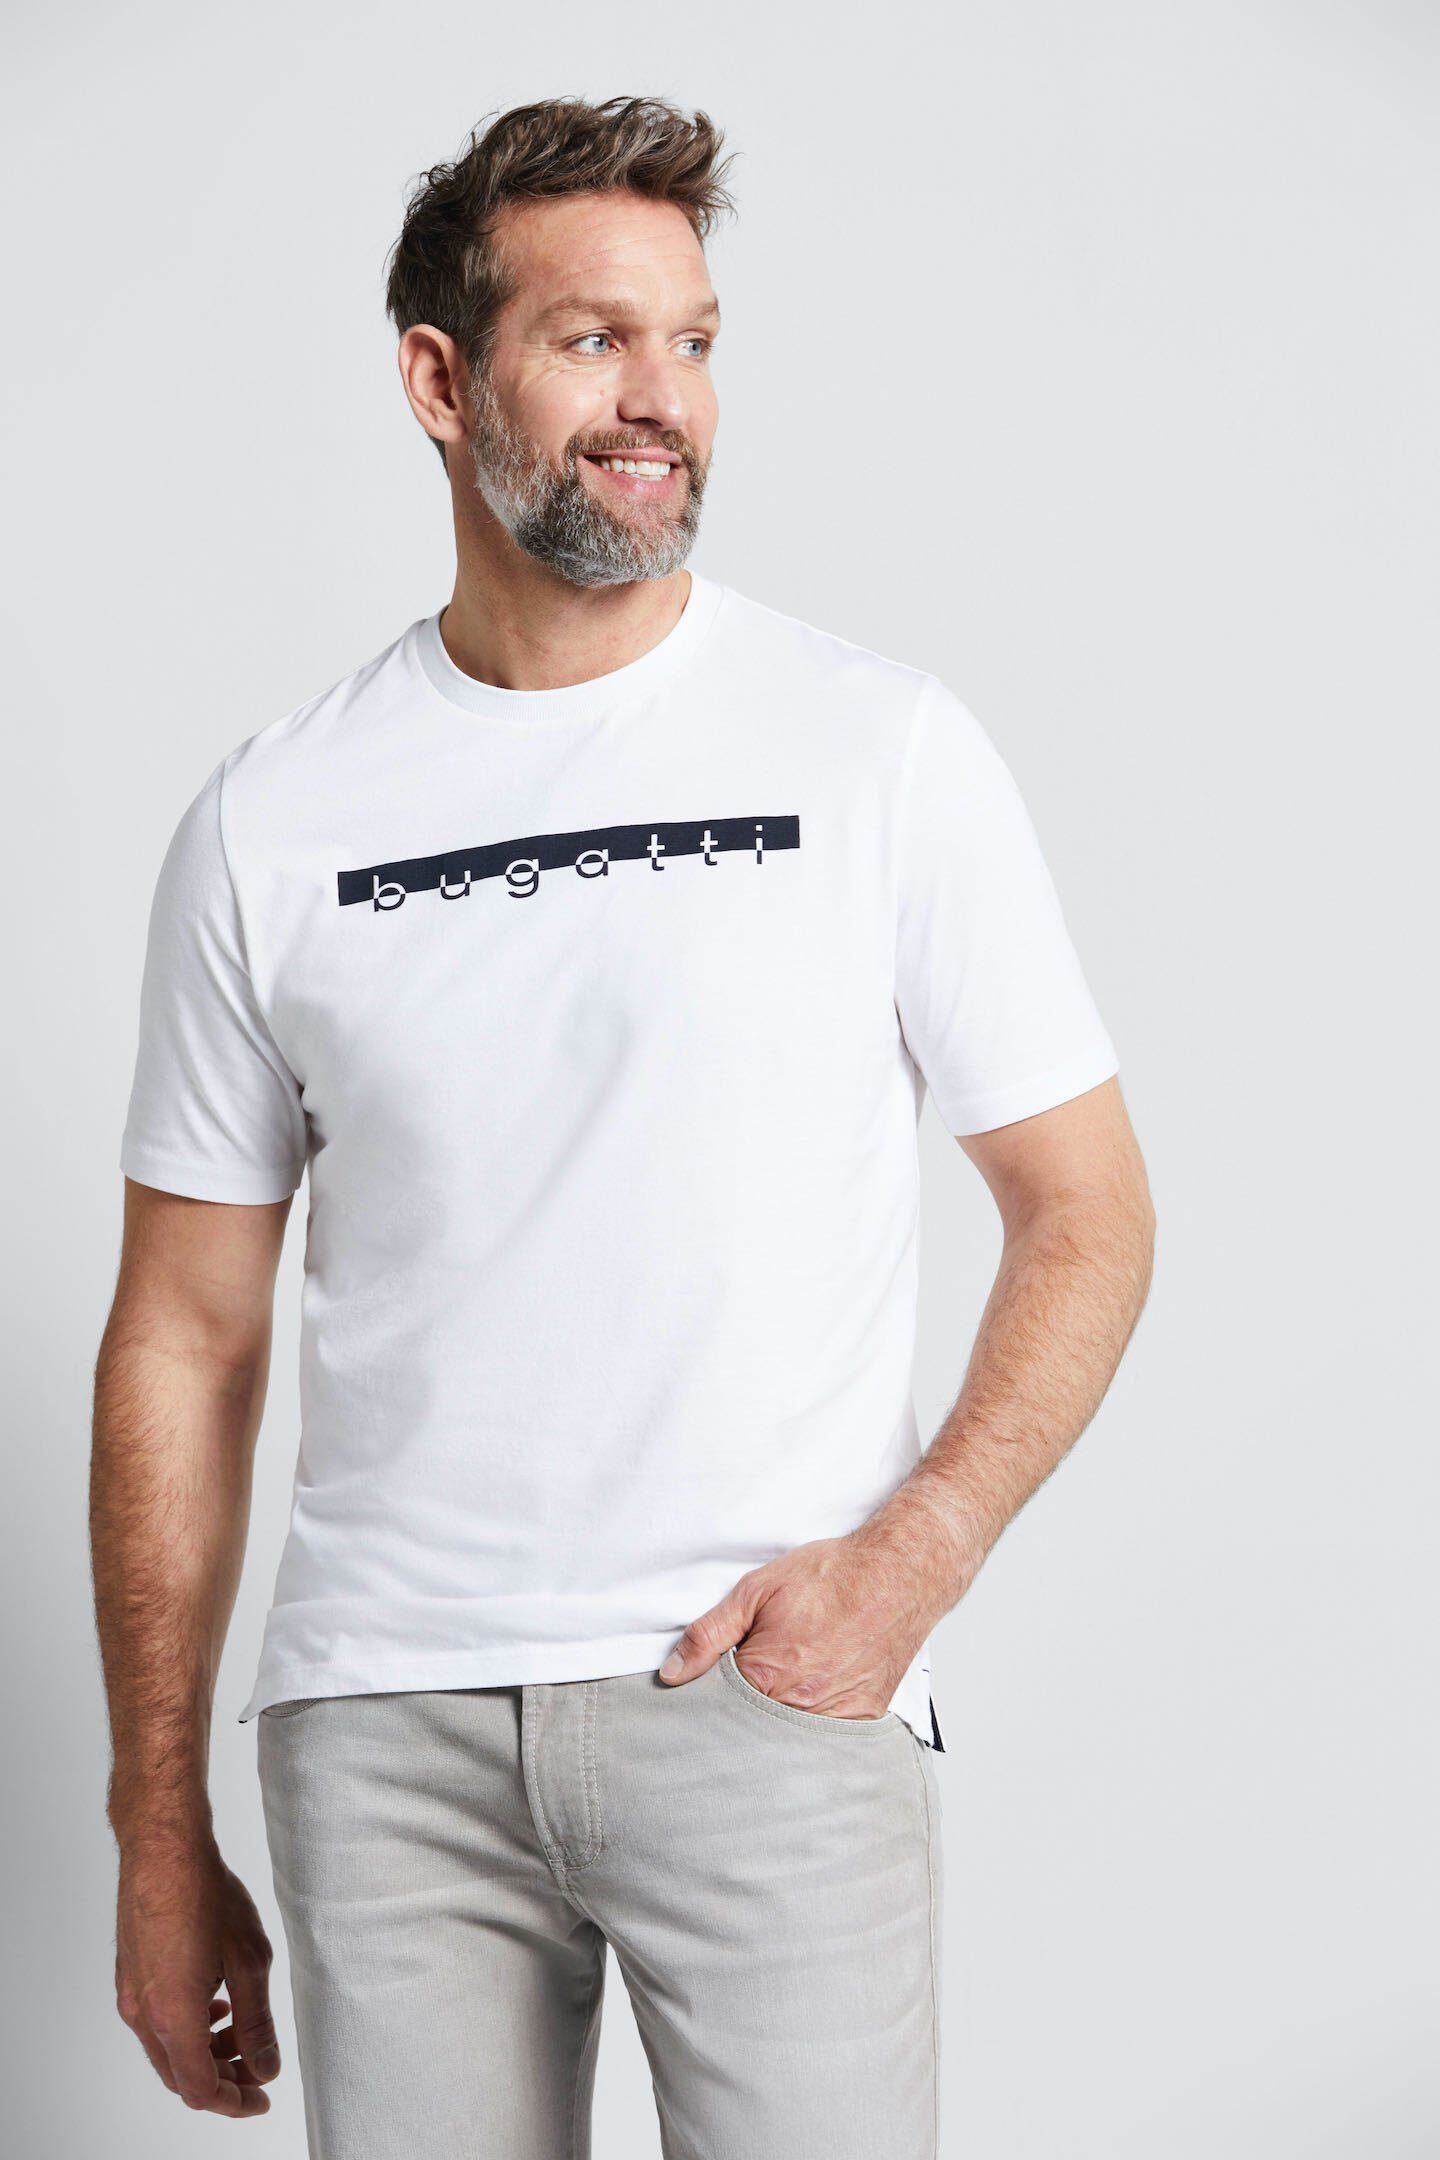 T-Shirt weiß Logo-Print bugatti mit großem